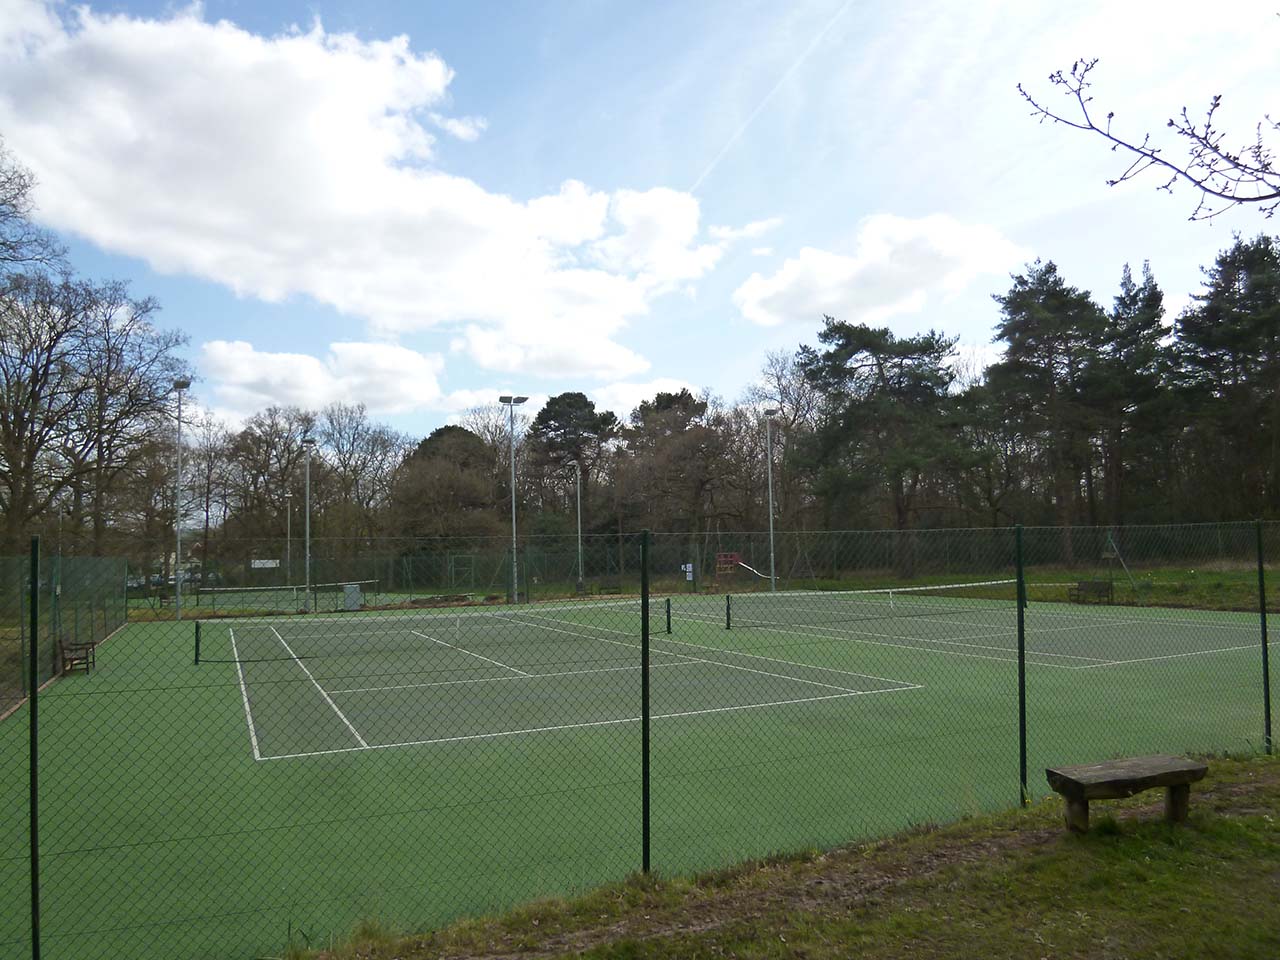 Normandy Tennis Club